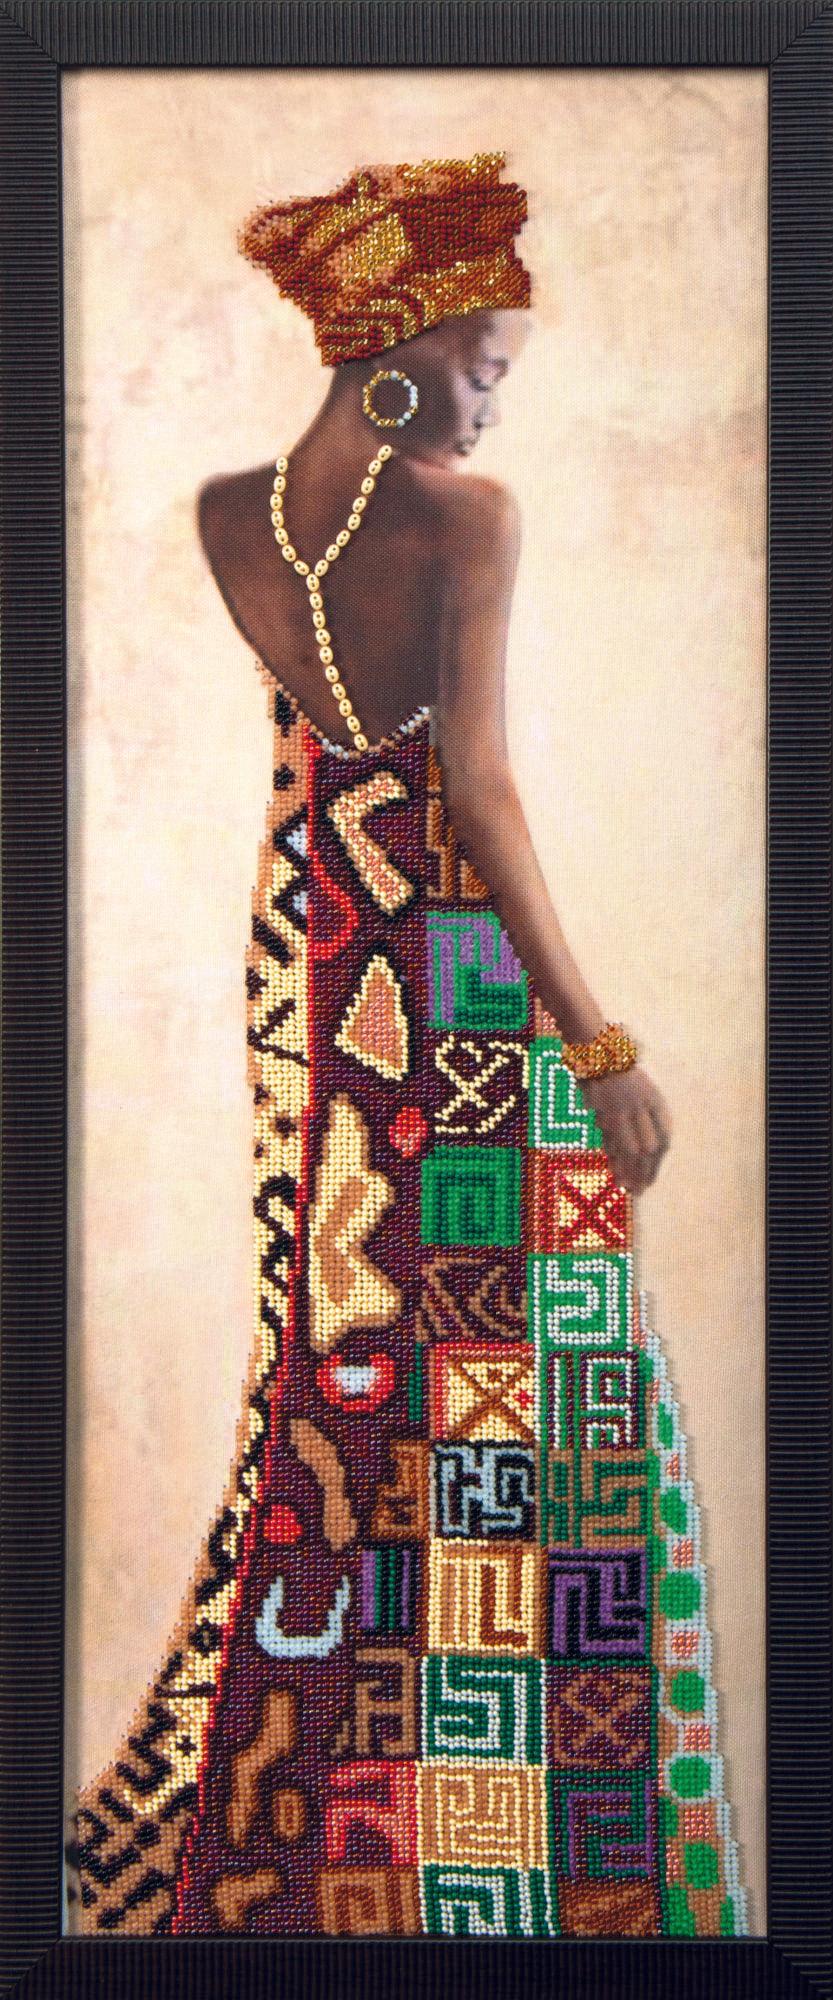 Beadwork kit B-703 "African Princess", Bead Embroidery, Needlepoint, Handcraft kit, DIY Beaded Painting 3D, Tapestry Beaded Cross Stitch kit, Beadwork - Leo Hobby